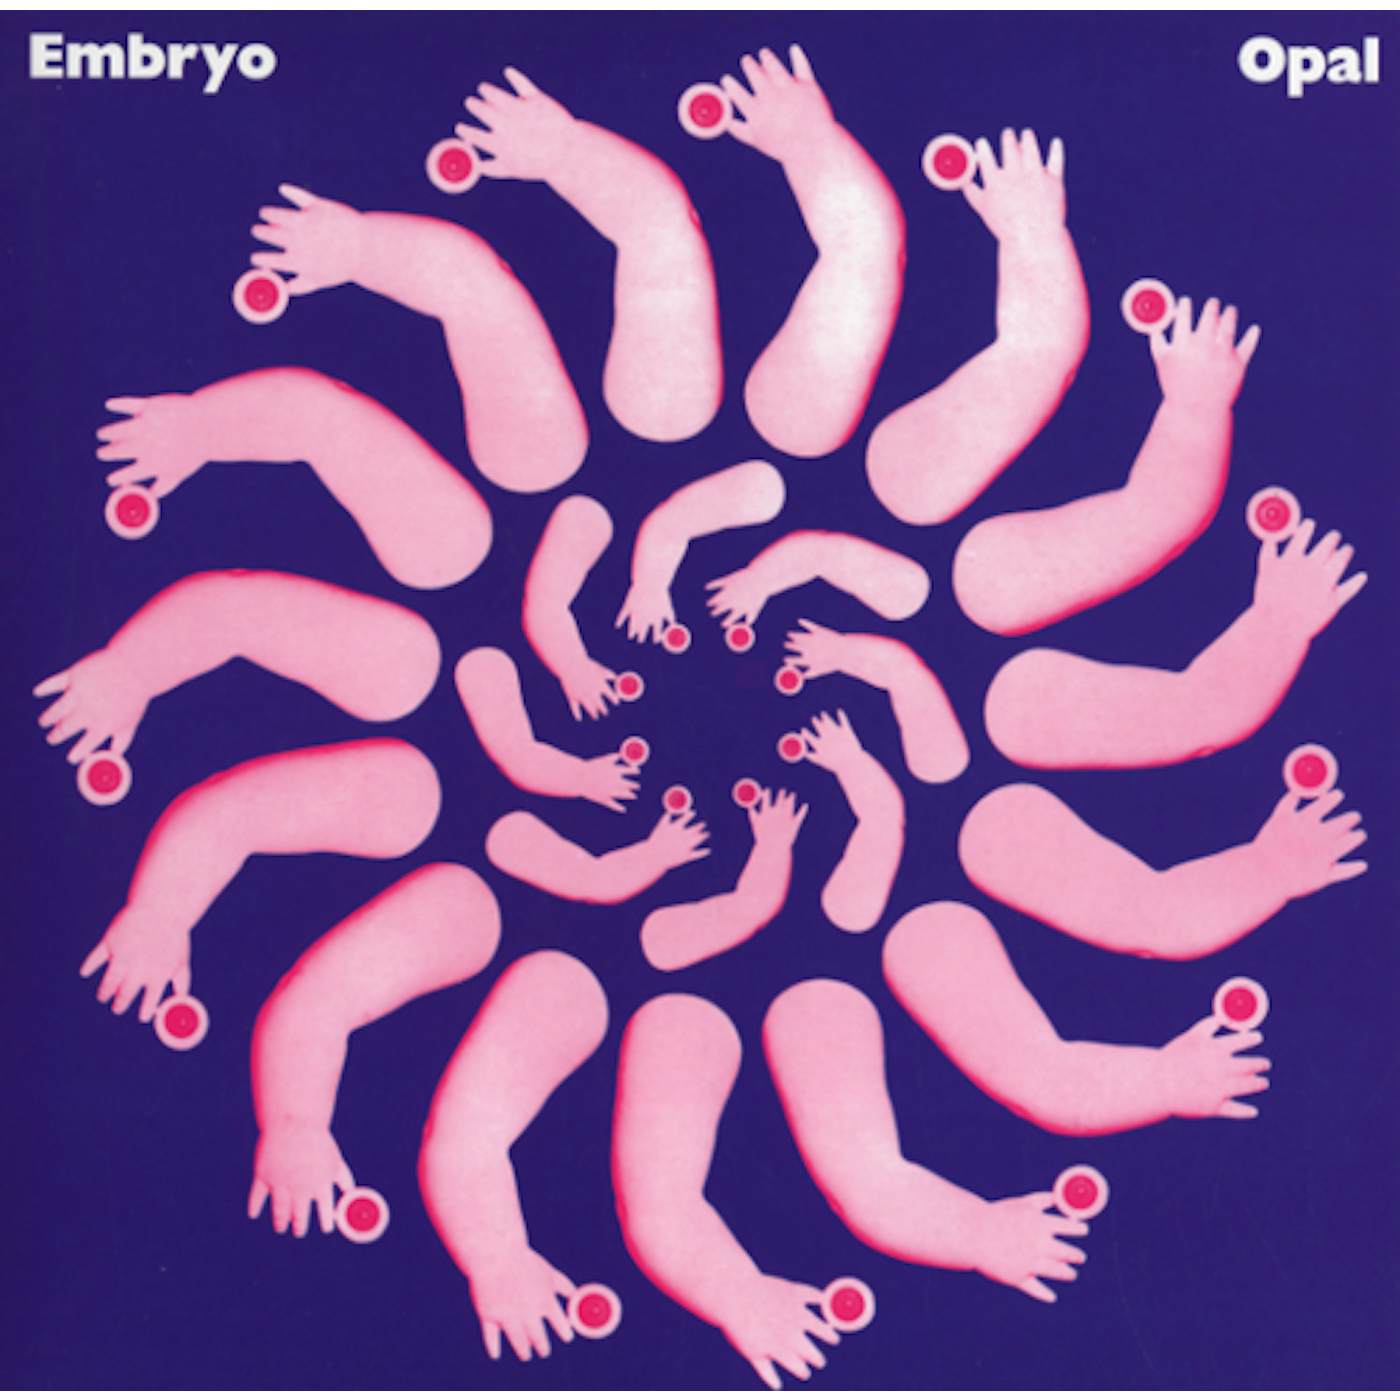 Embryo Opal Vinyl Record